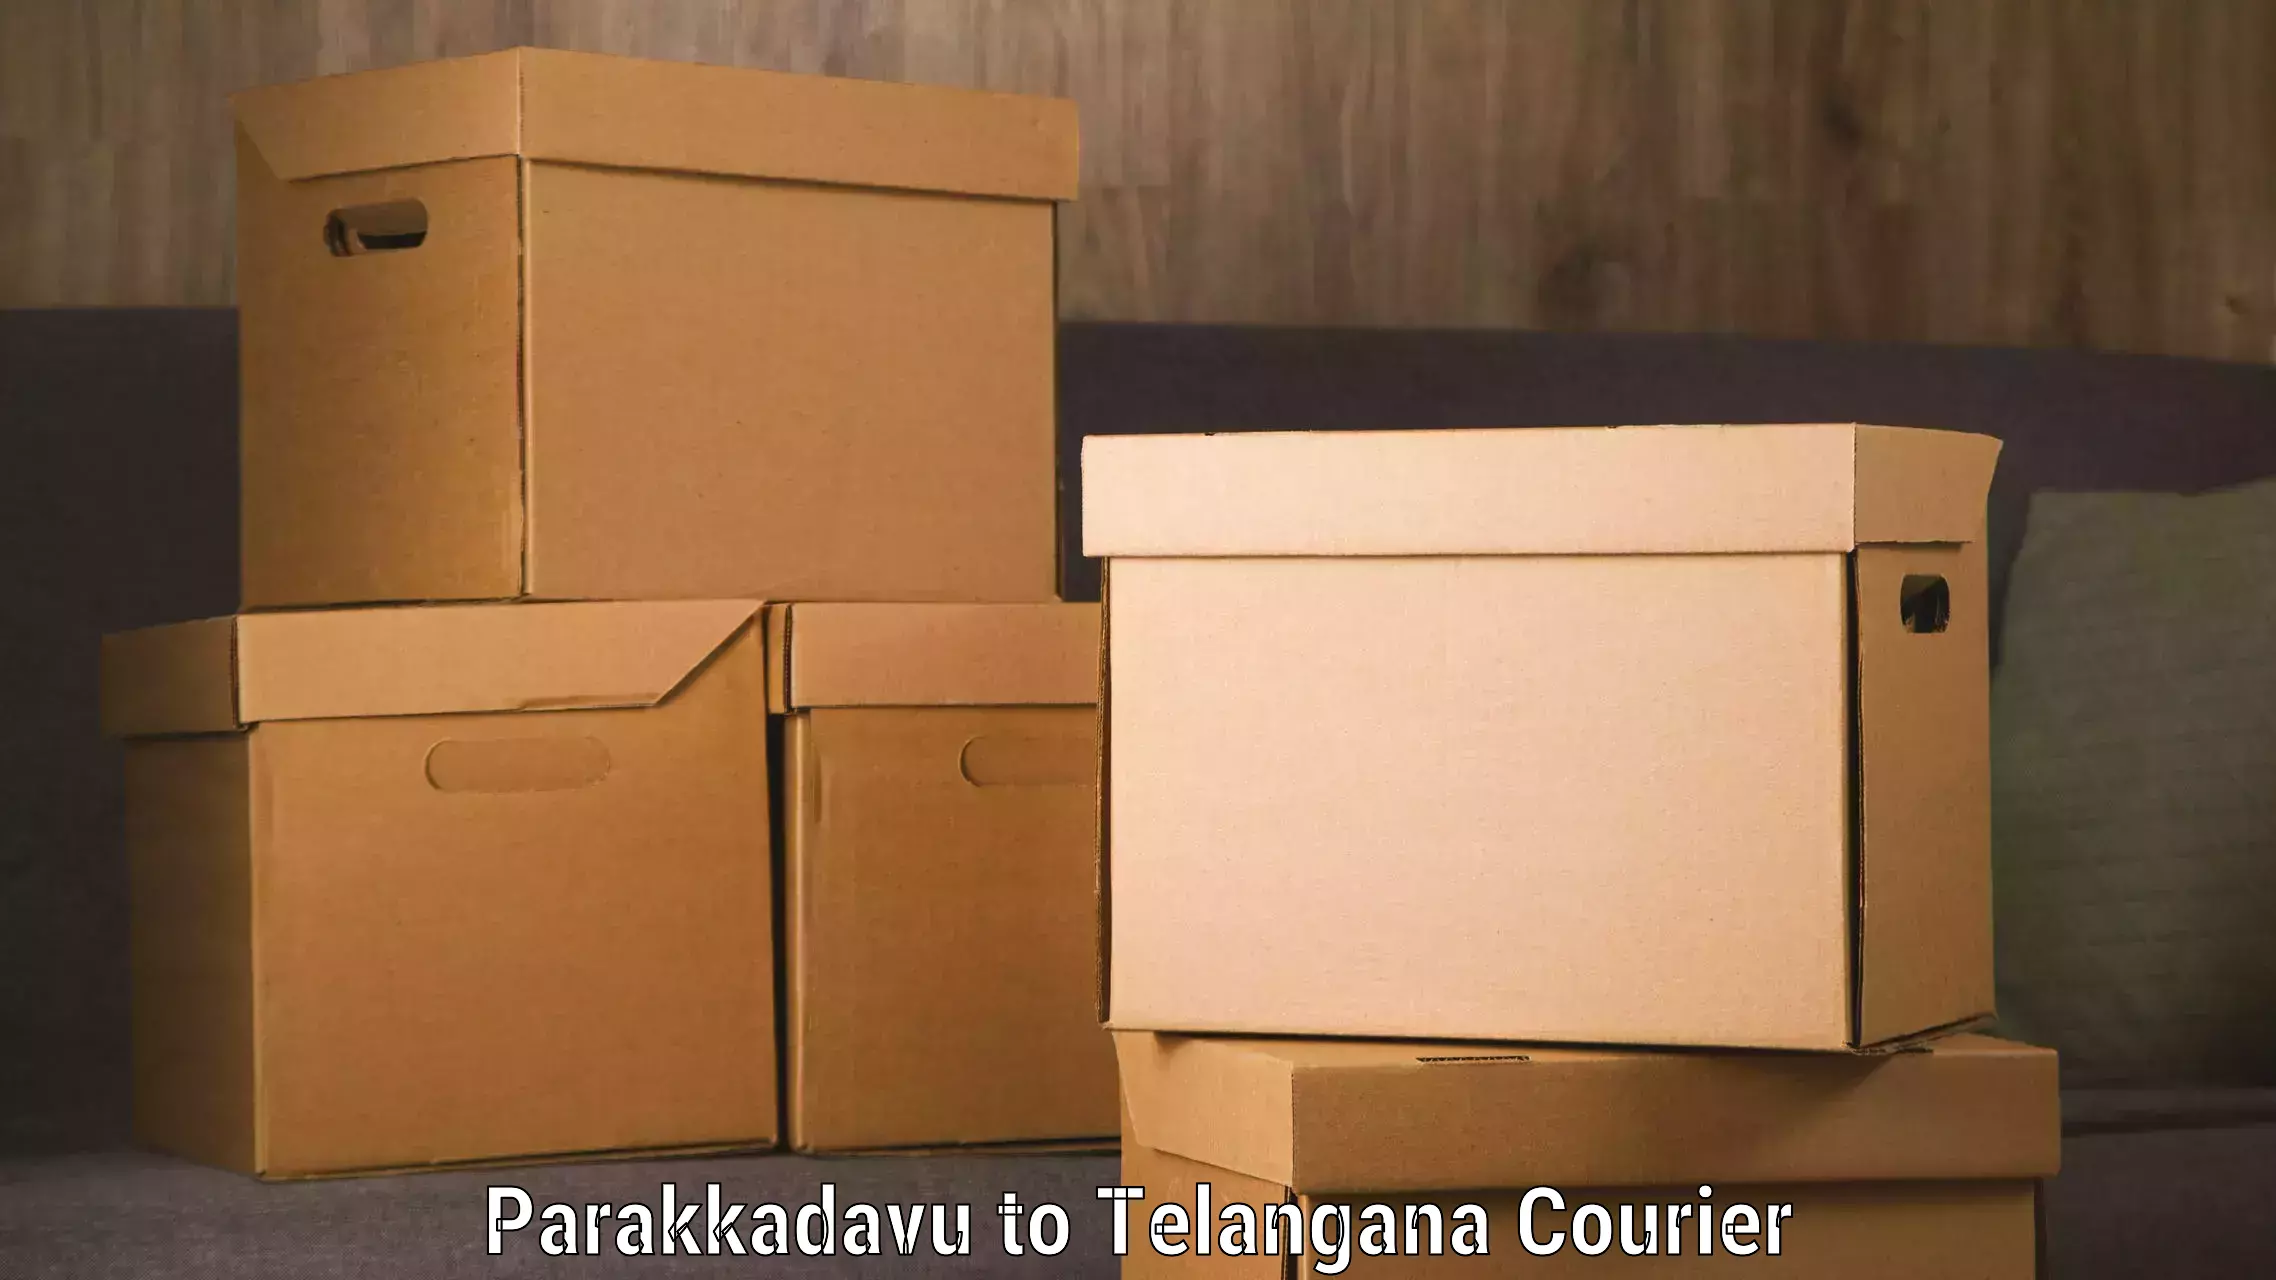 Efficient order fulfillment Parakkadavu to Sircilla